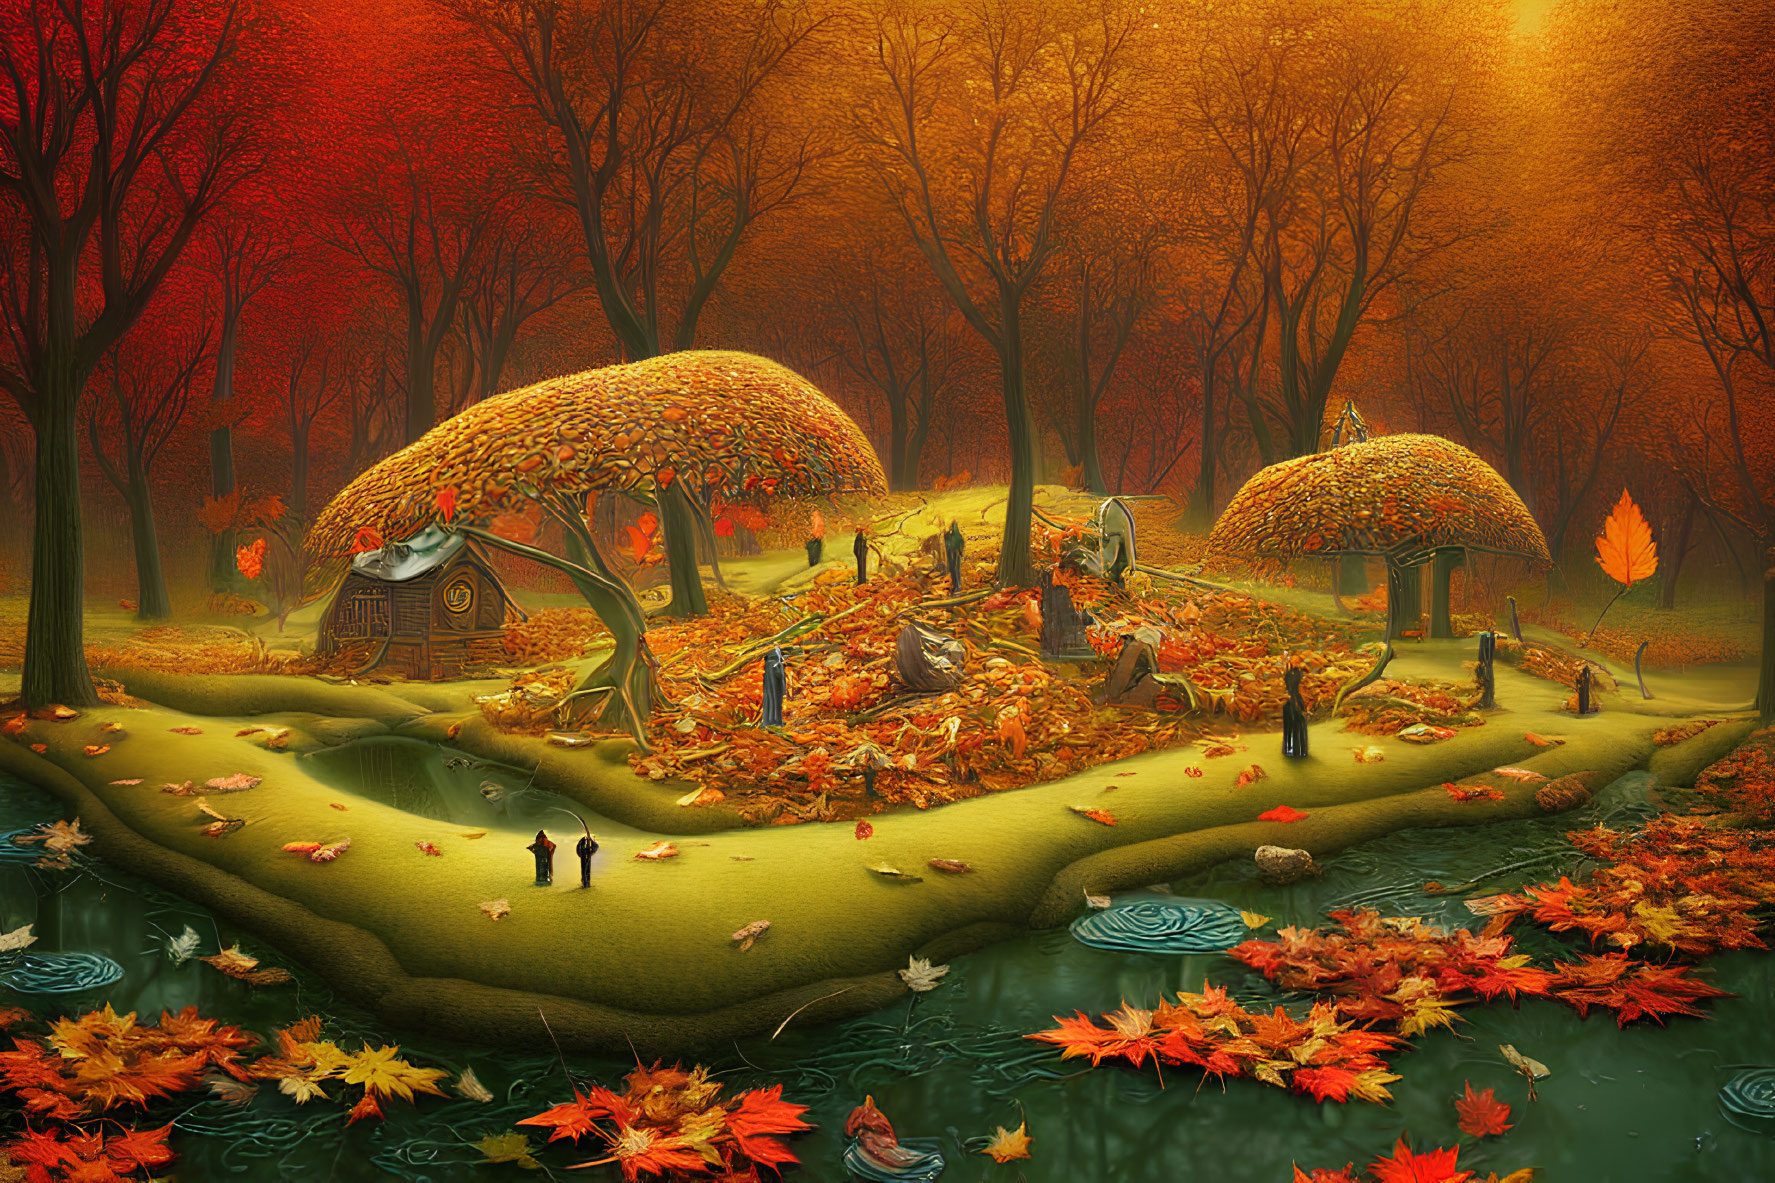 Whimsical mushroom houses in enchanting autumn landscape